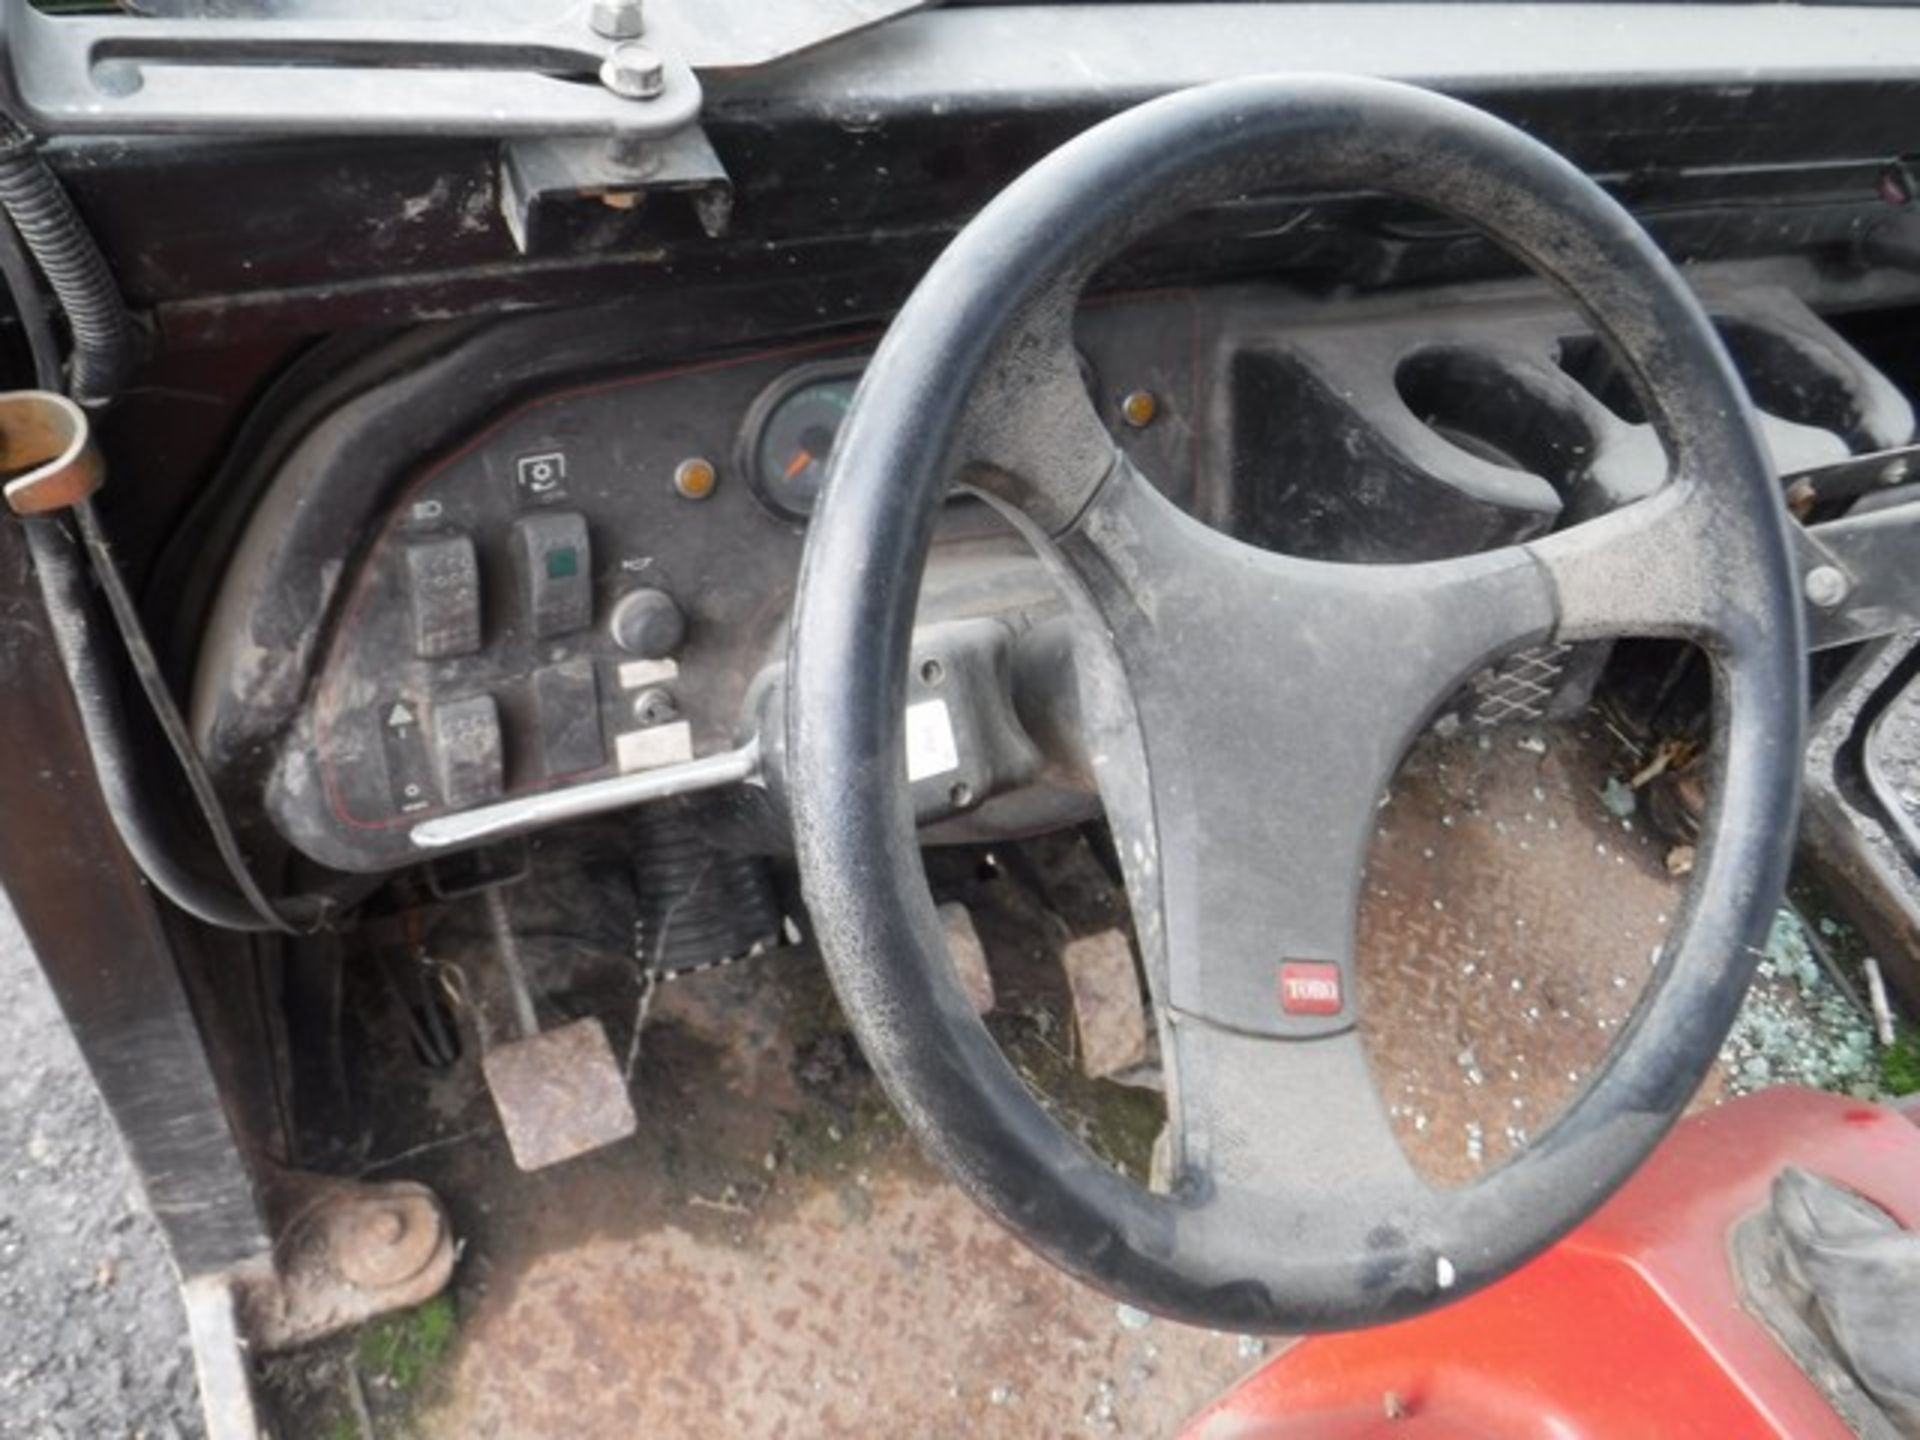 2011 TORO WORKMAN HDX 4WD, S/N 310000277, REG - SP60EFT, 4 X 4 UTILITY VEHICLE, VEHICLE NOT DRIVING - Image 5 of 15